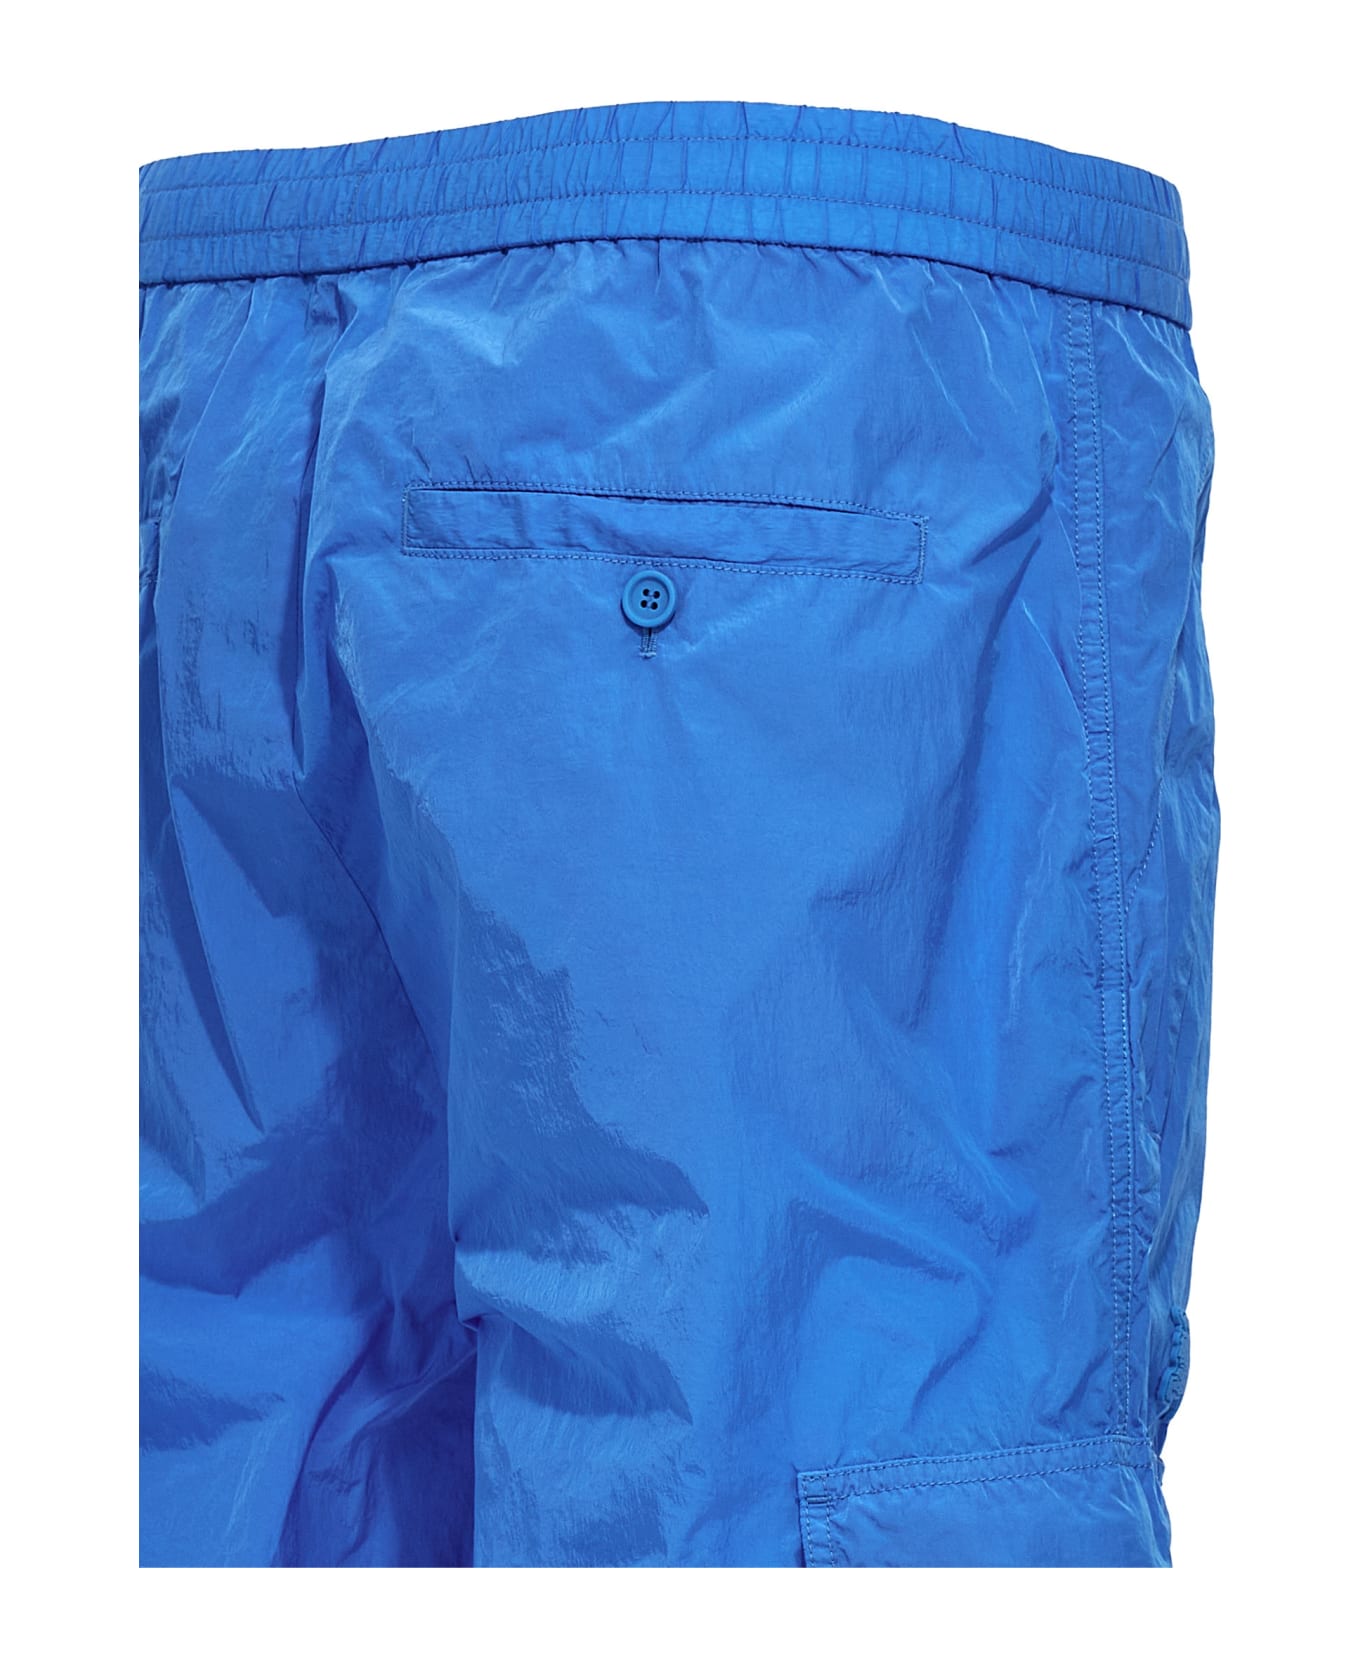 Burberry Capleton' Pants - Light Blue